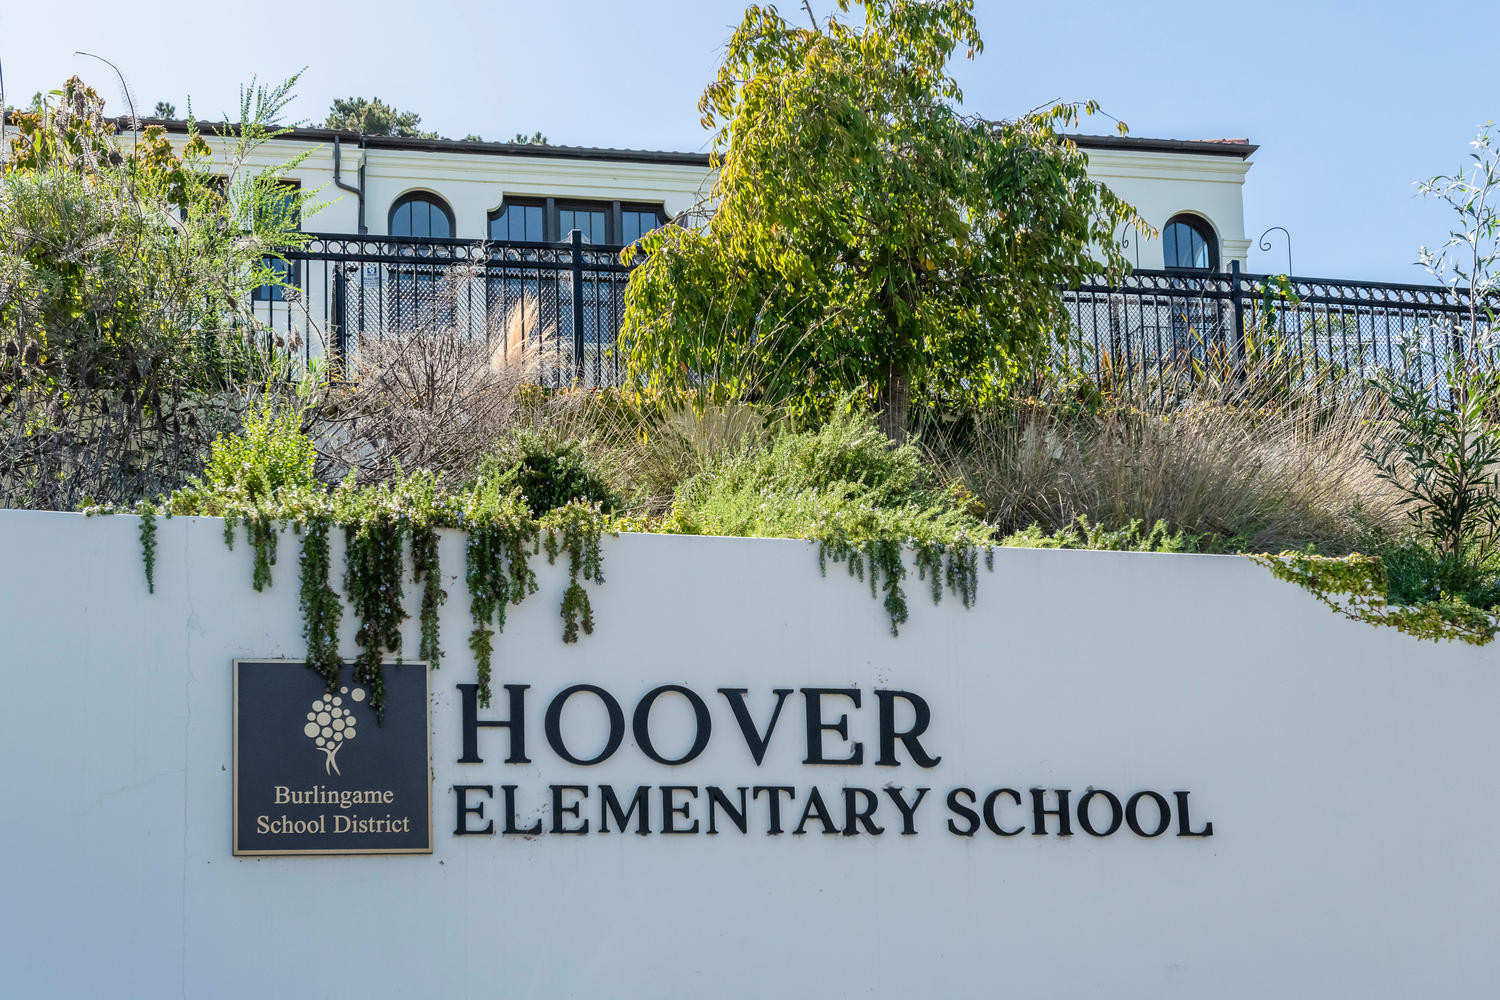 Hoover Elementary School Signage in Burlingame Hills Neighborhood in Burlingame.